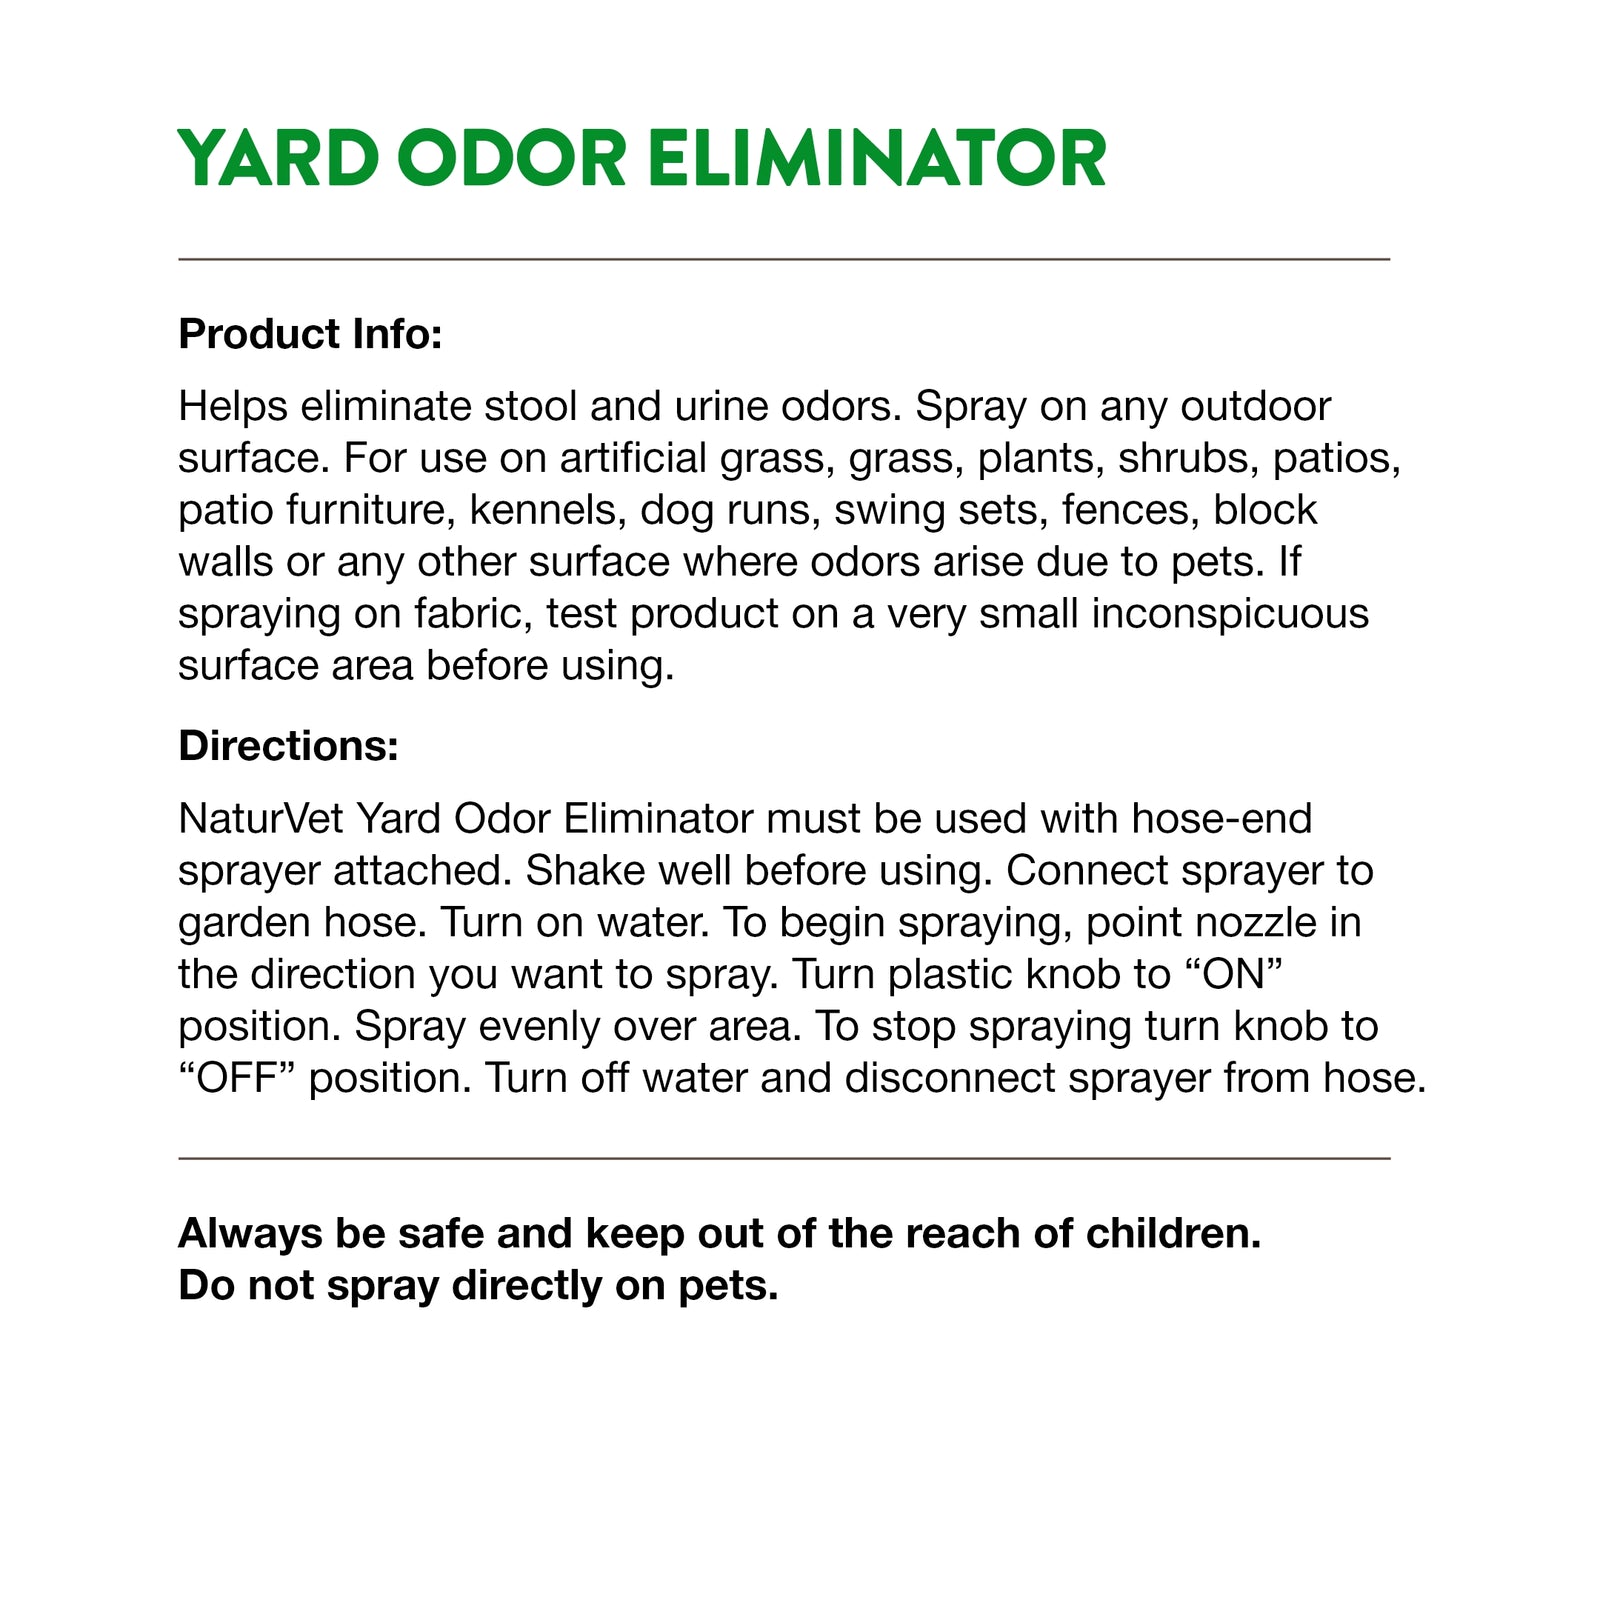 NaturVet Yard Odor Eliminator, Stool and Urine Deodorizer, 32 fl oz